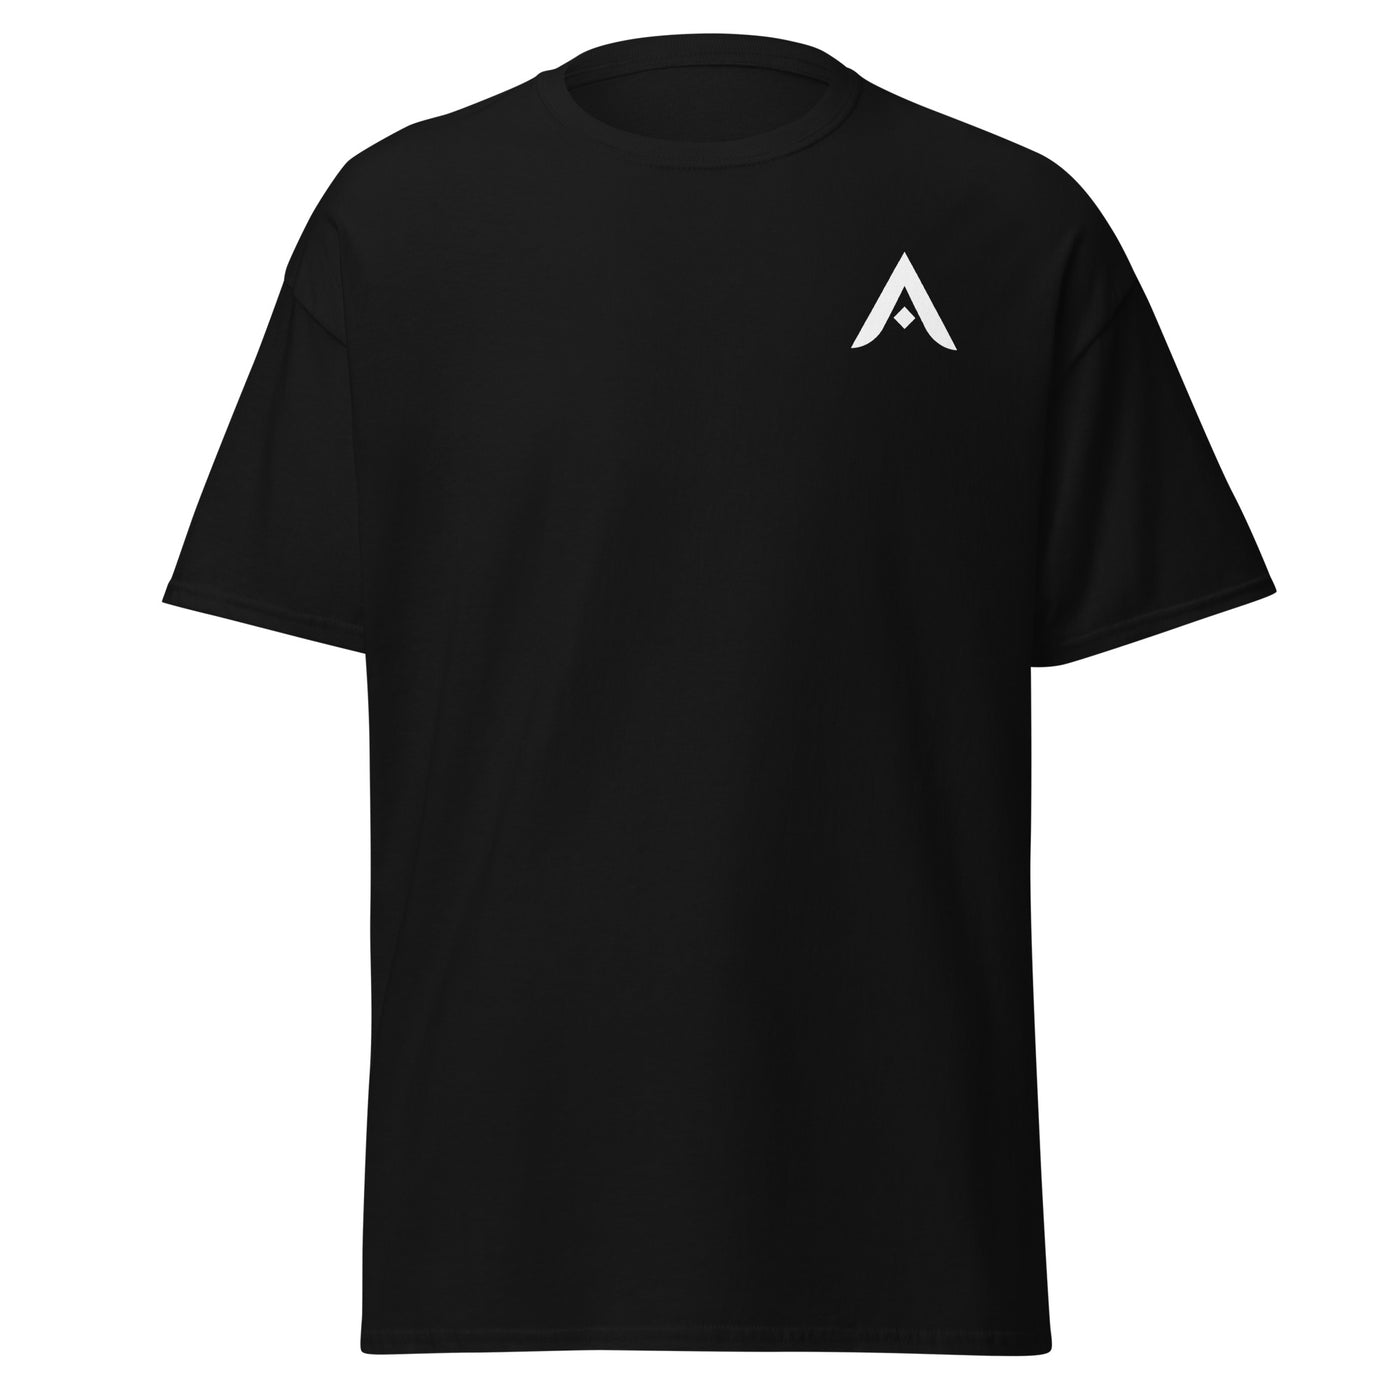 Aware Unisex T-shirt